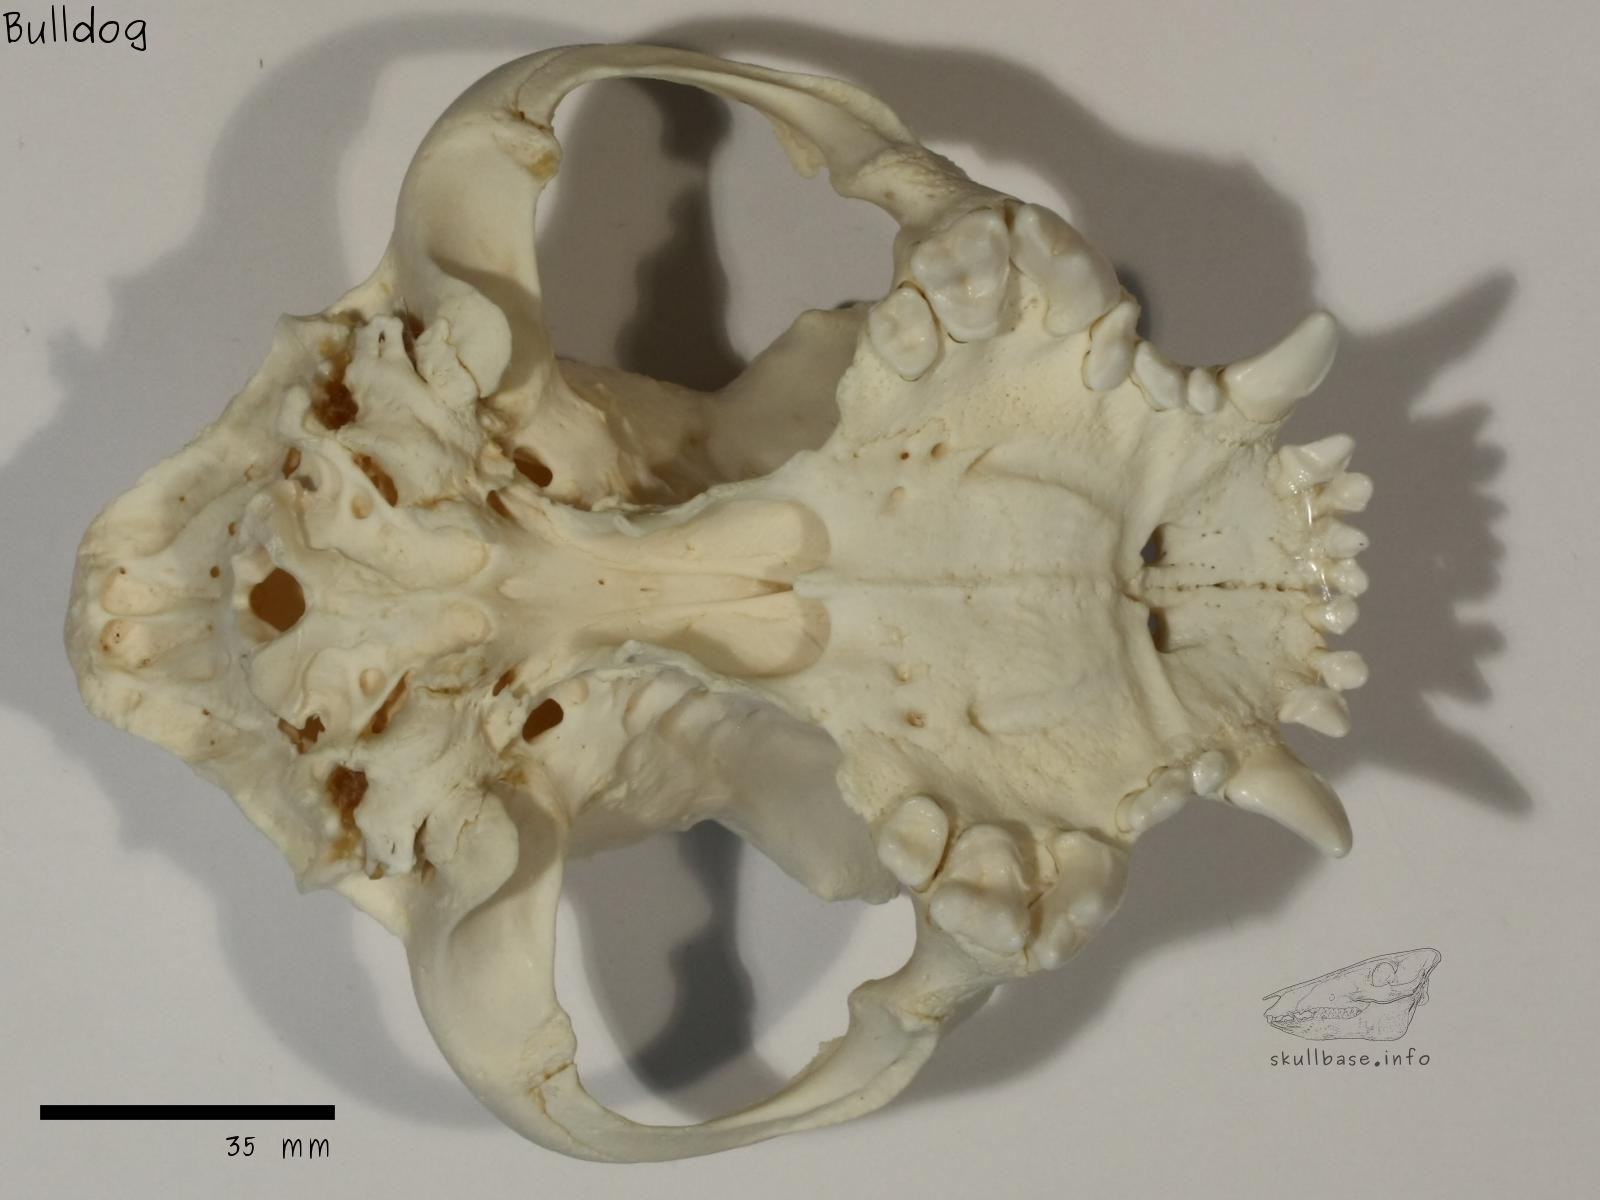 Bulldog (Canis lupus familiaris) skull ventral view